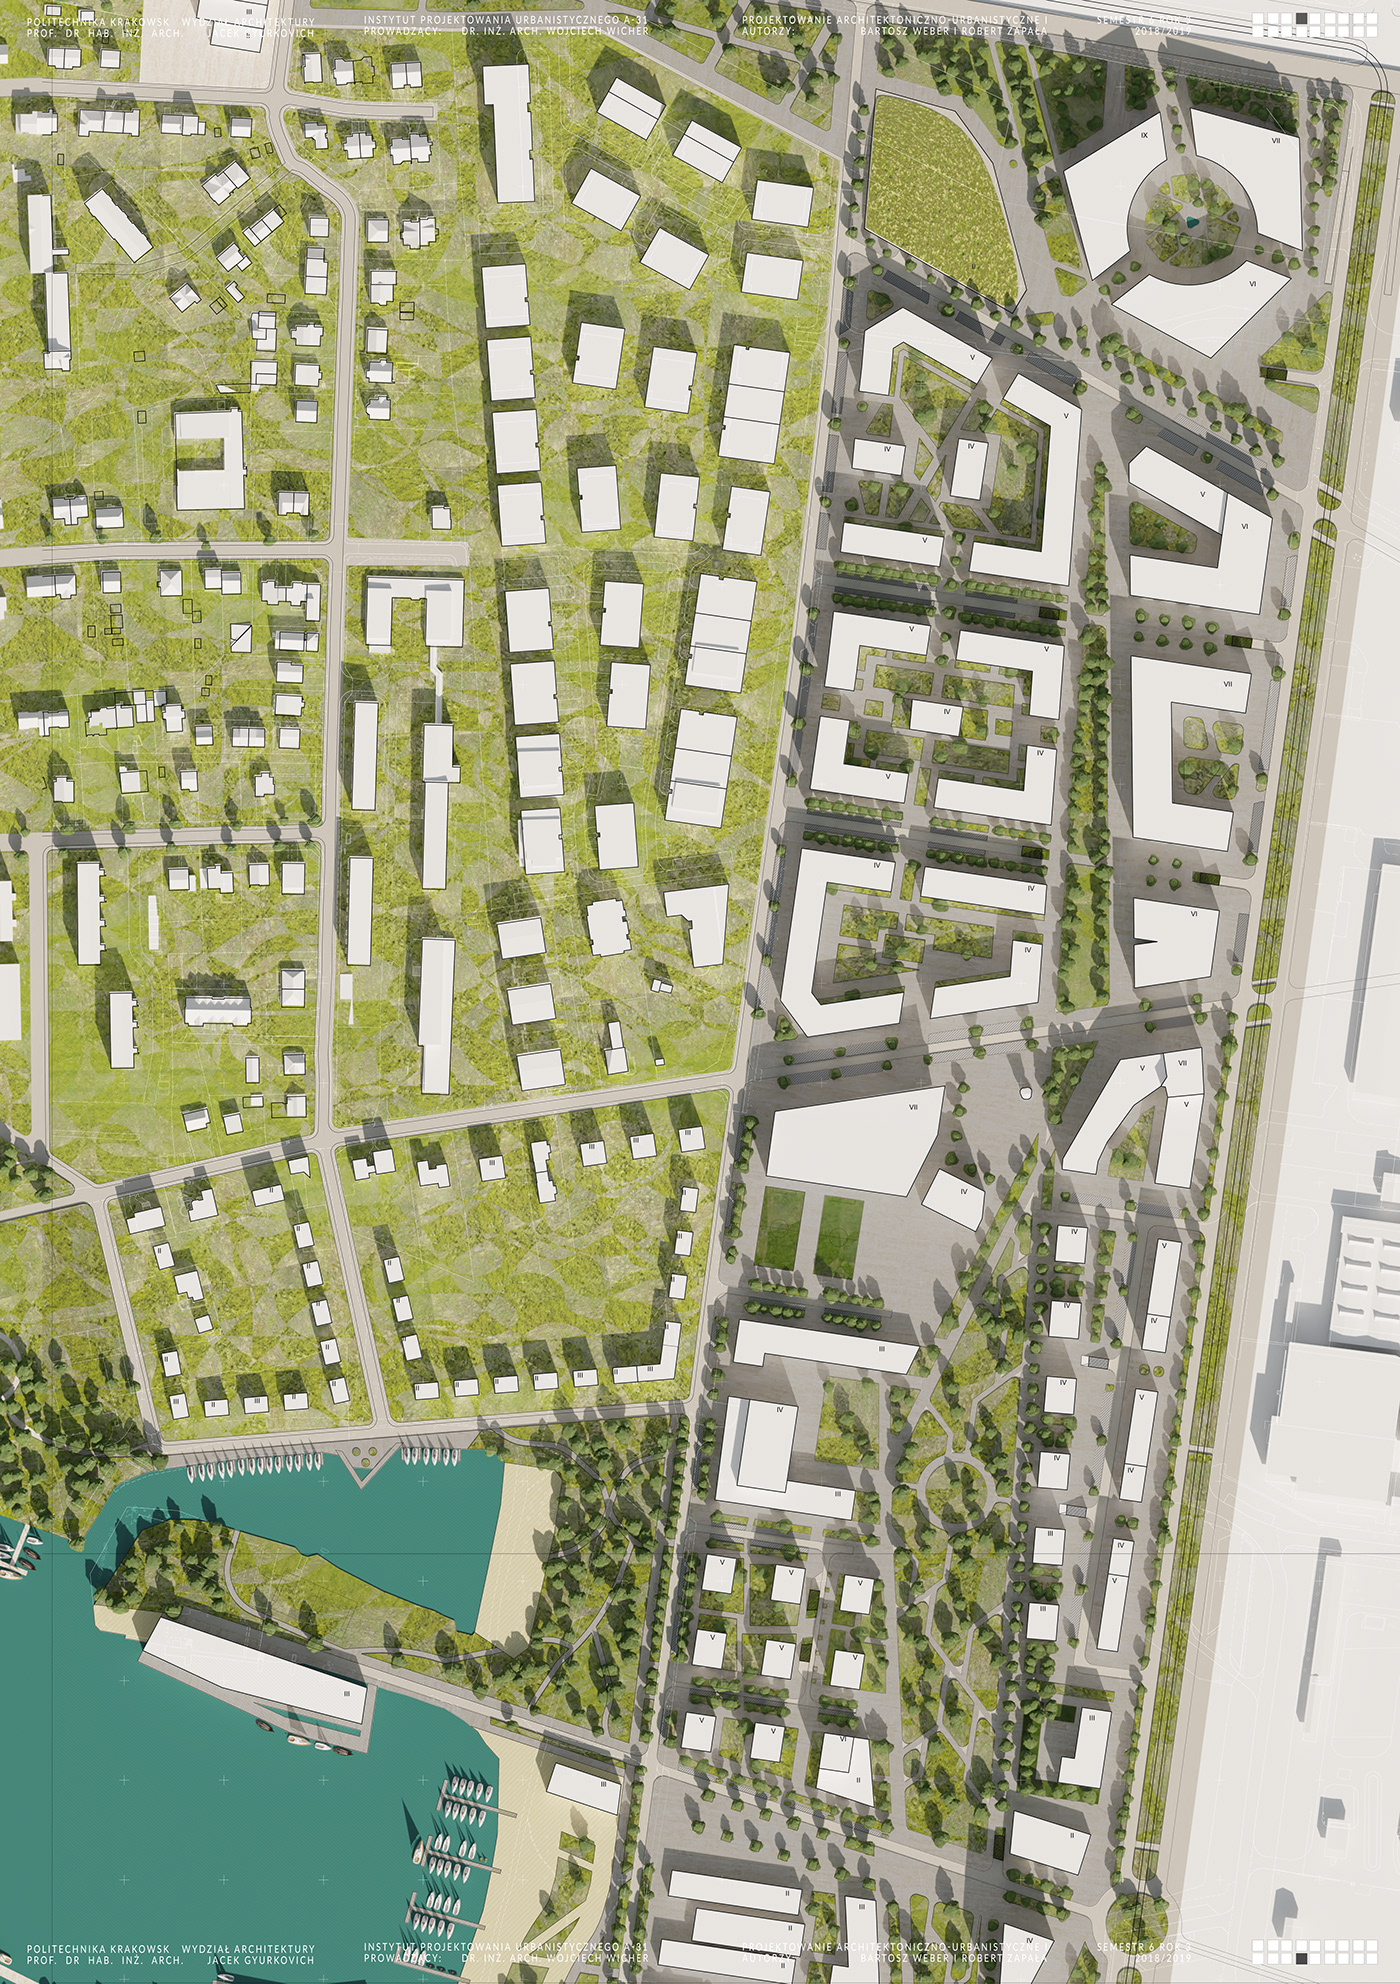 Cracov Landscape Design urban planning